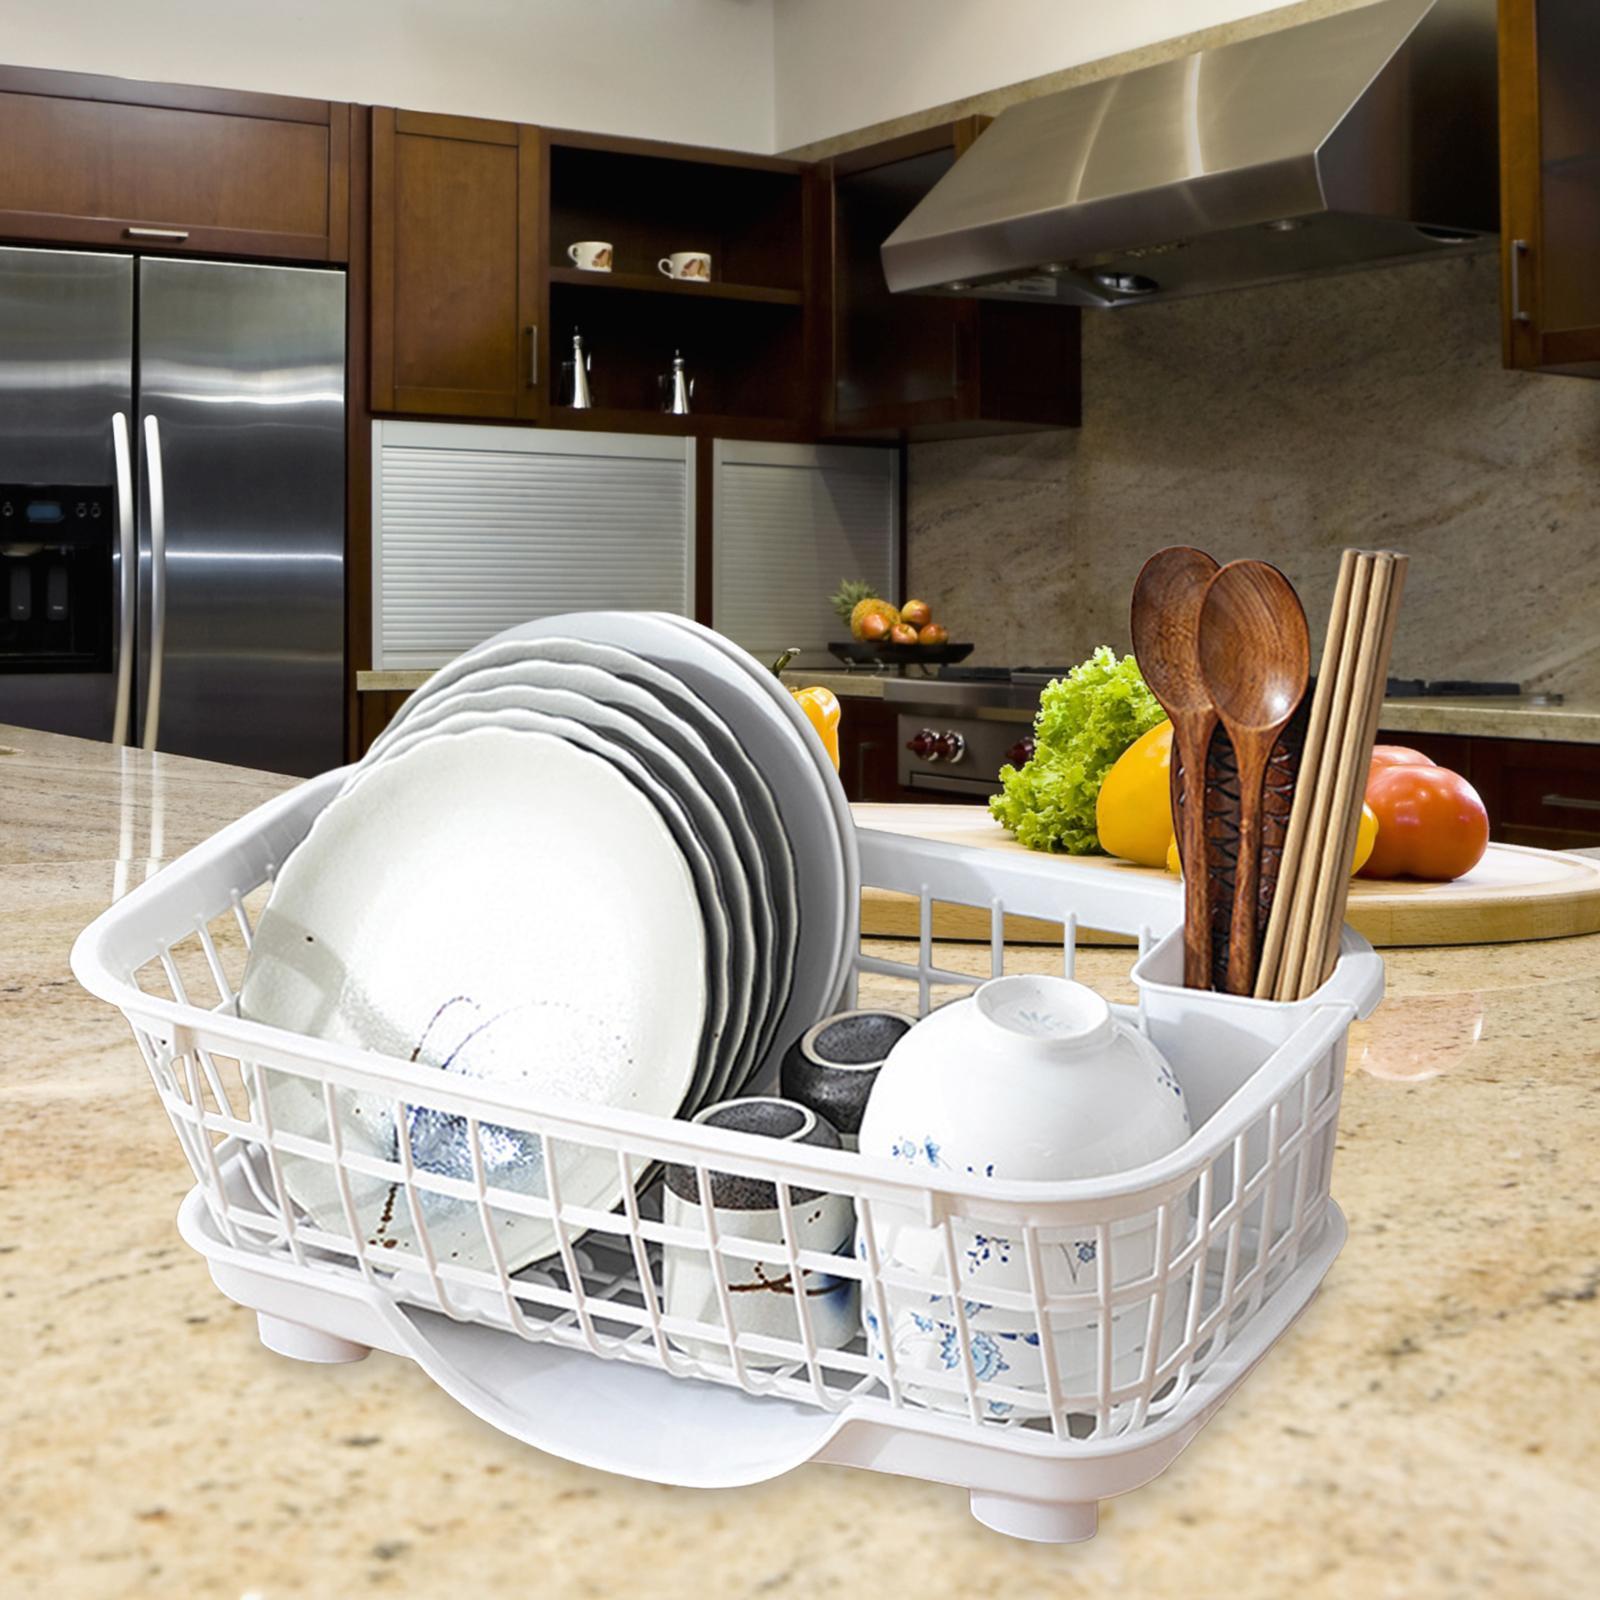 over The Sink Dish Rack Basket Bowl Drying Holder for Dish Chopsticks Spoons